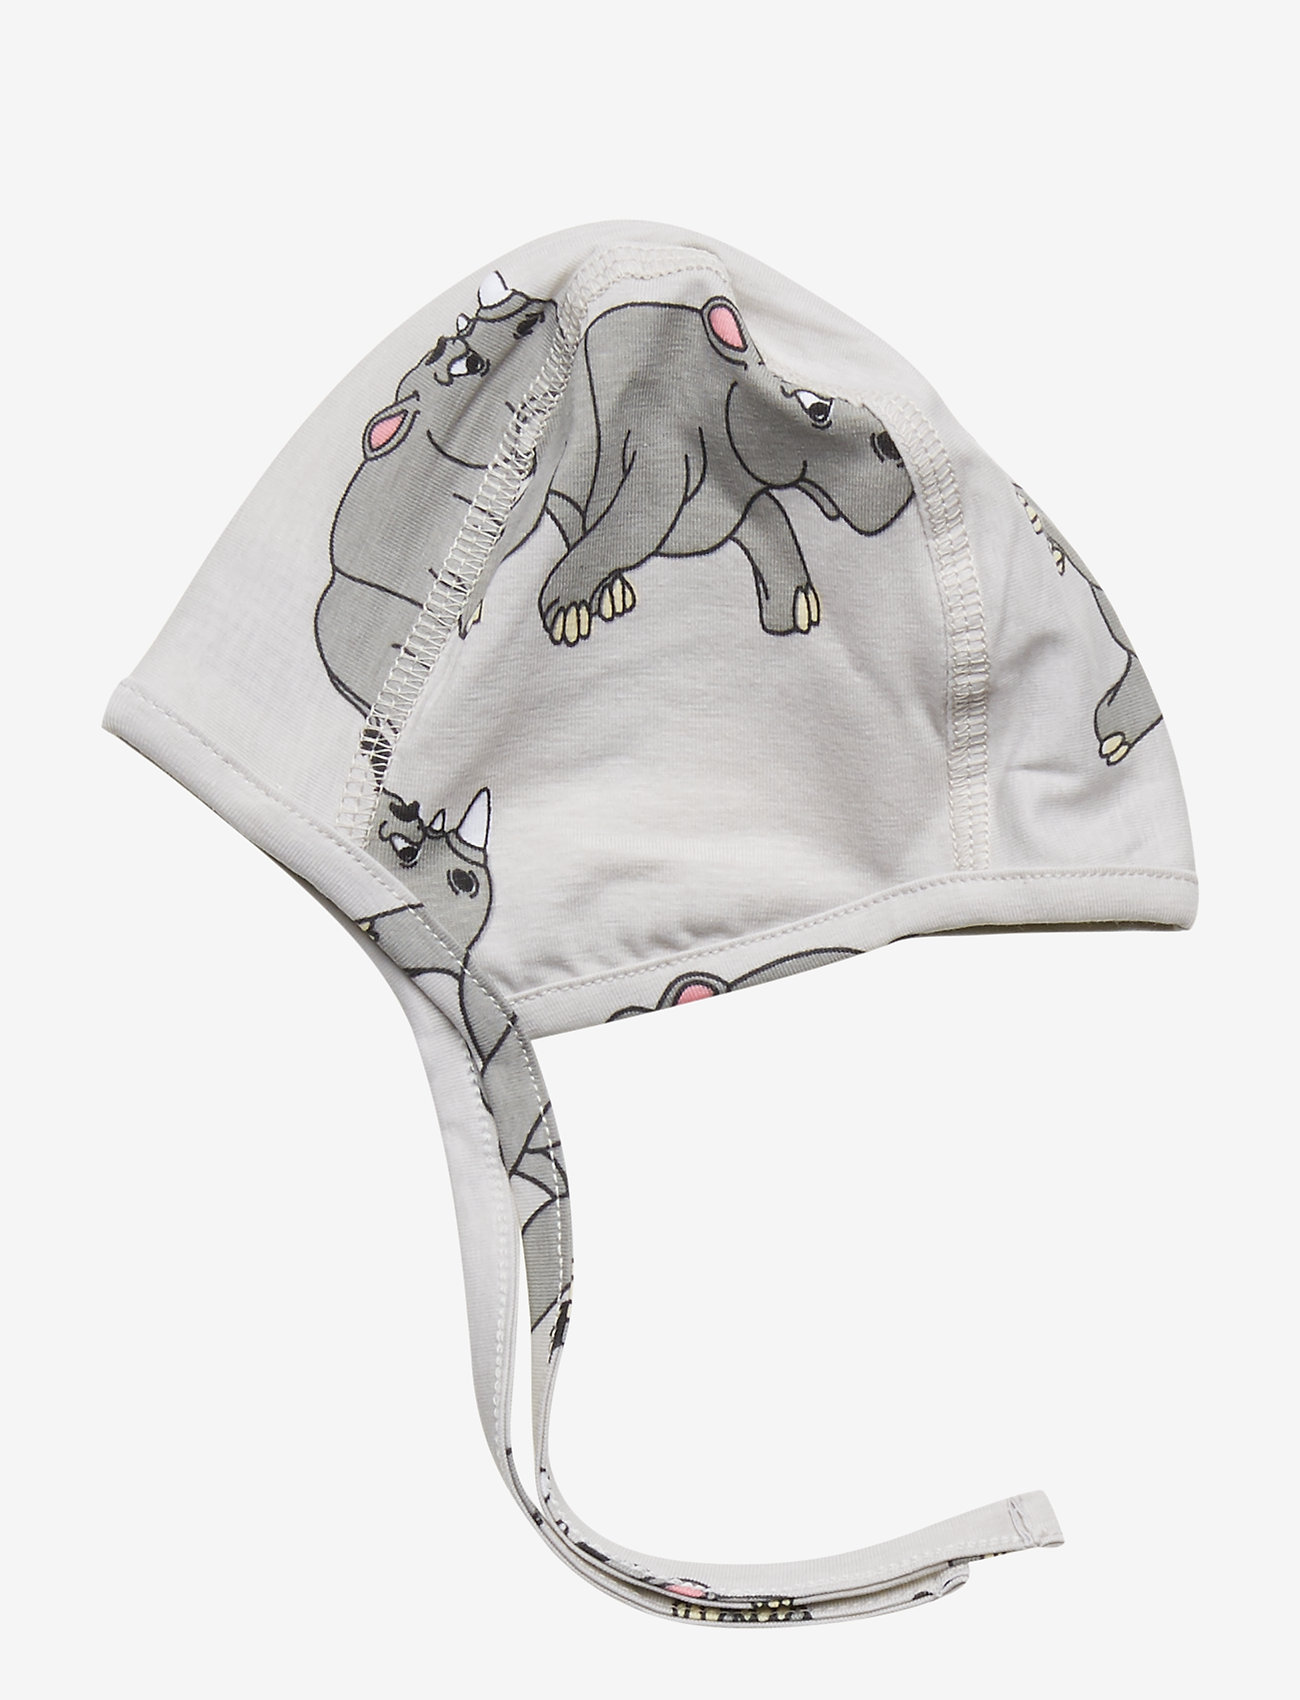 Tao & friends - New born hat multi-animal - lowest prices - light grey - 0